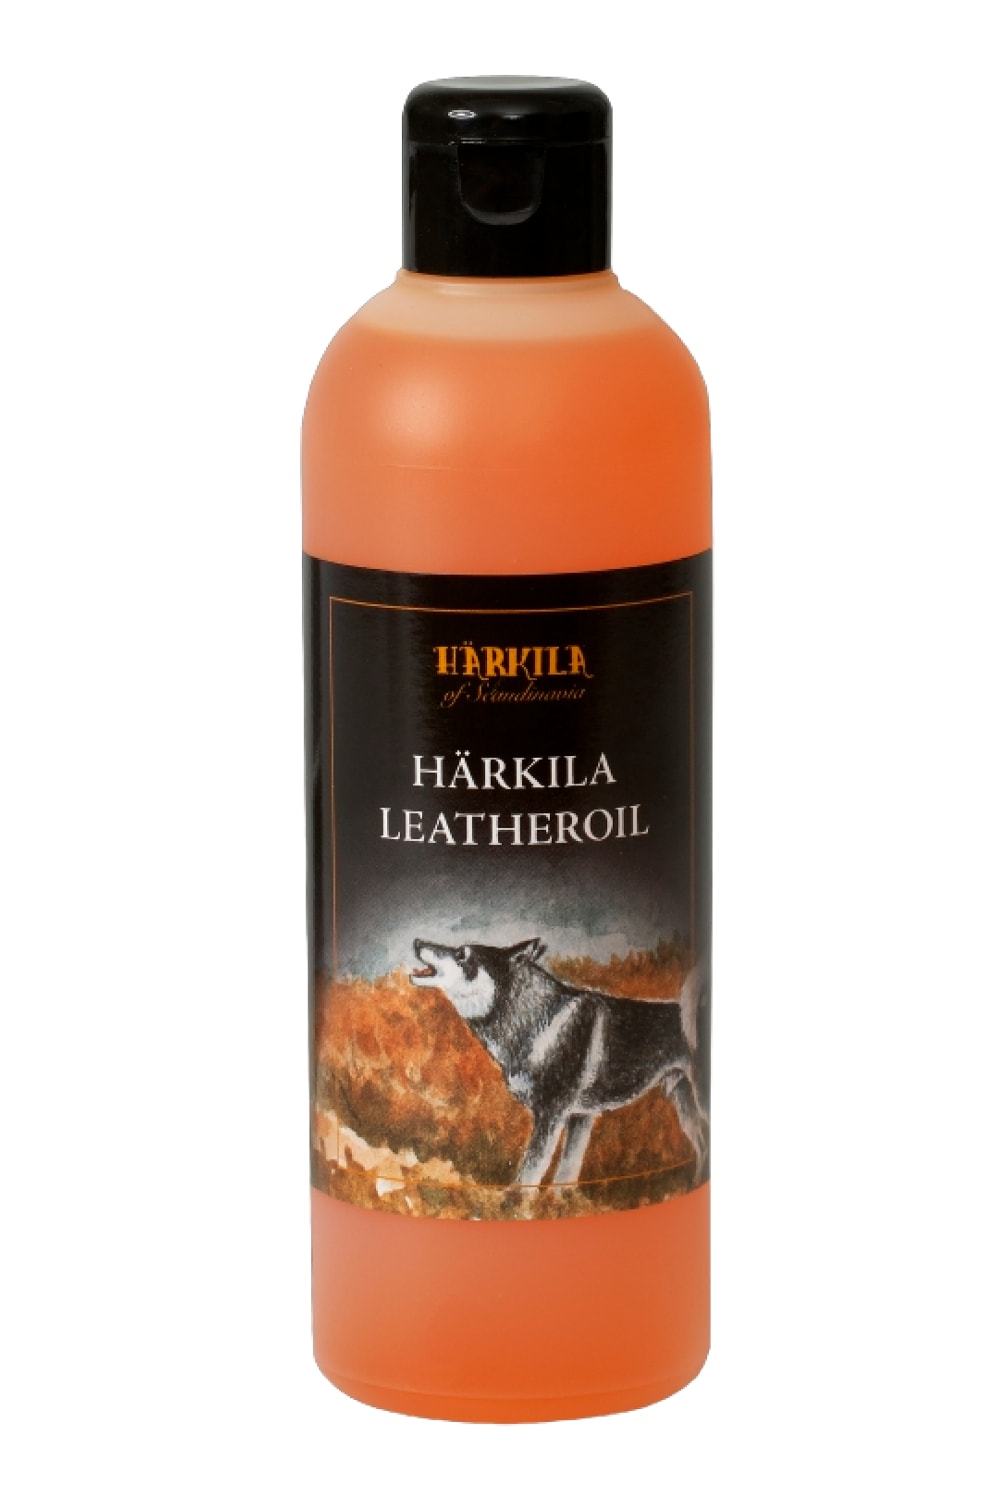 Harkila Leather Oil in Neutral Colour